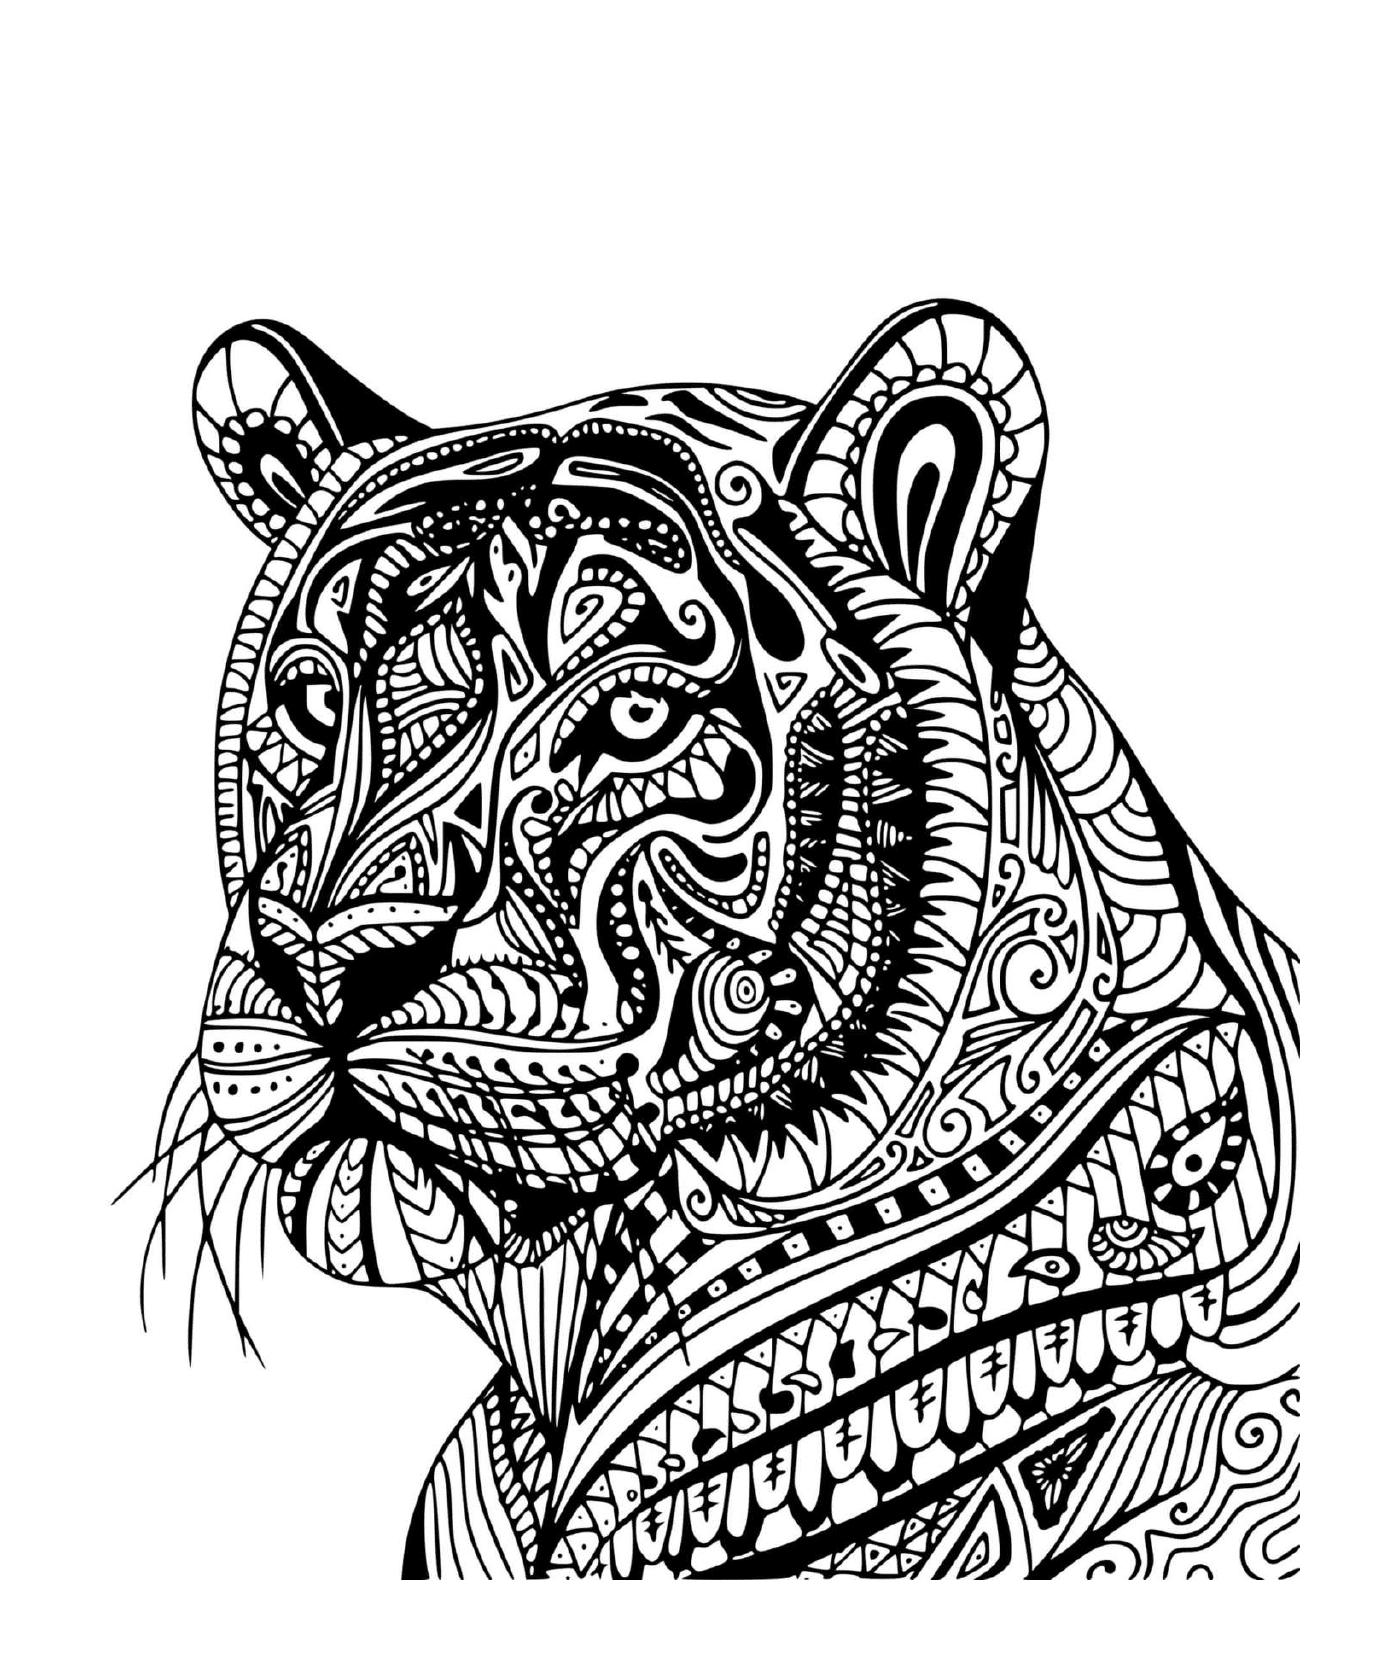   Un tigre adulte en profil 